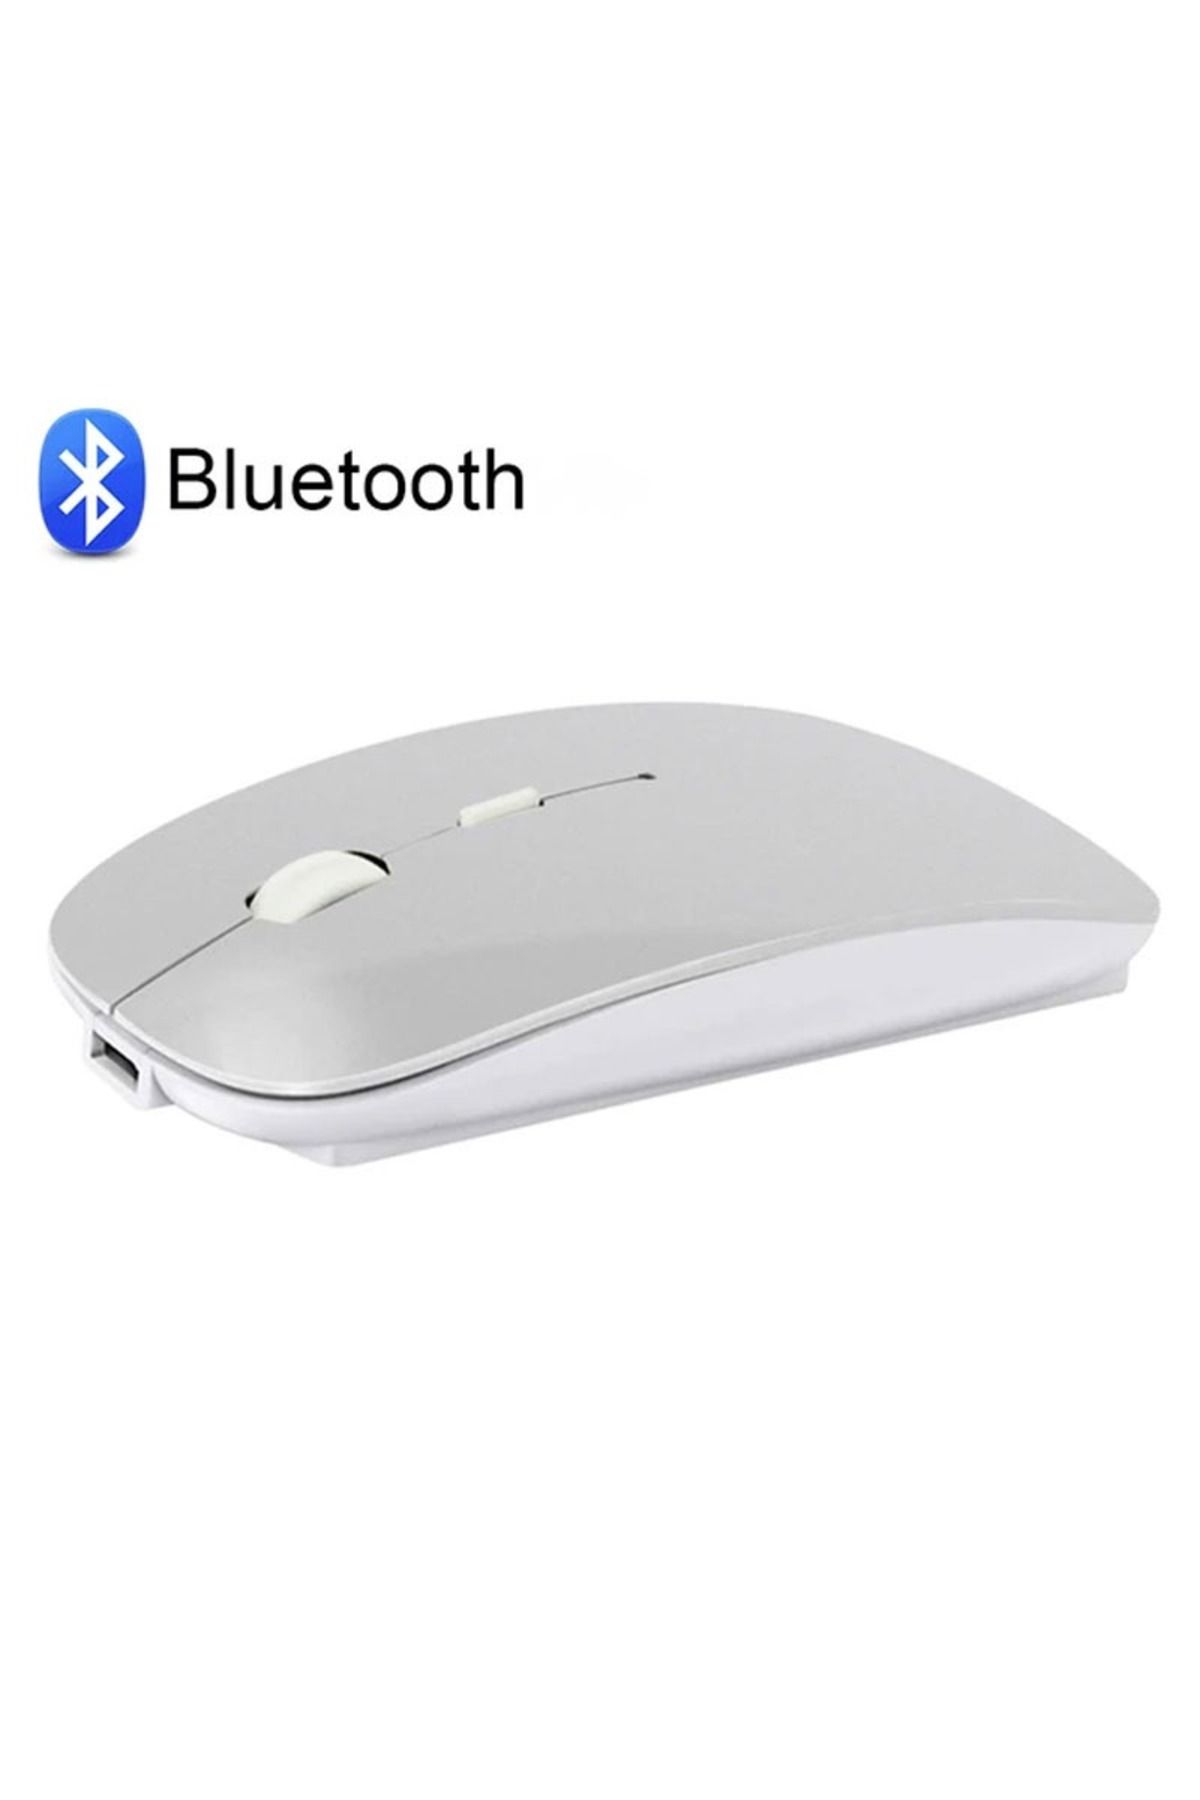 Alfa MEC Tüm Cihazlara Uyumlu Mouse Bluetooth Pilli Fare 2.4g Macbook Ipad Bilgisayar Telefon